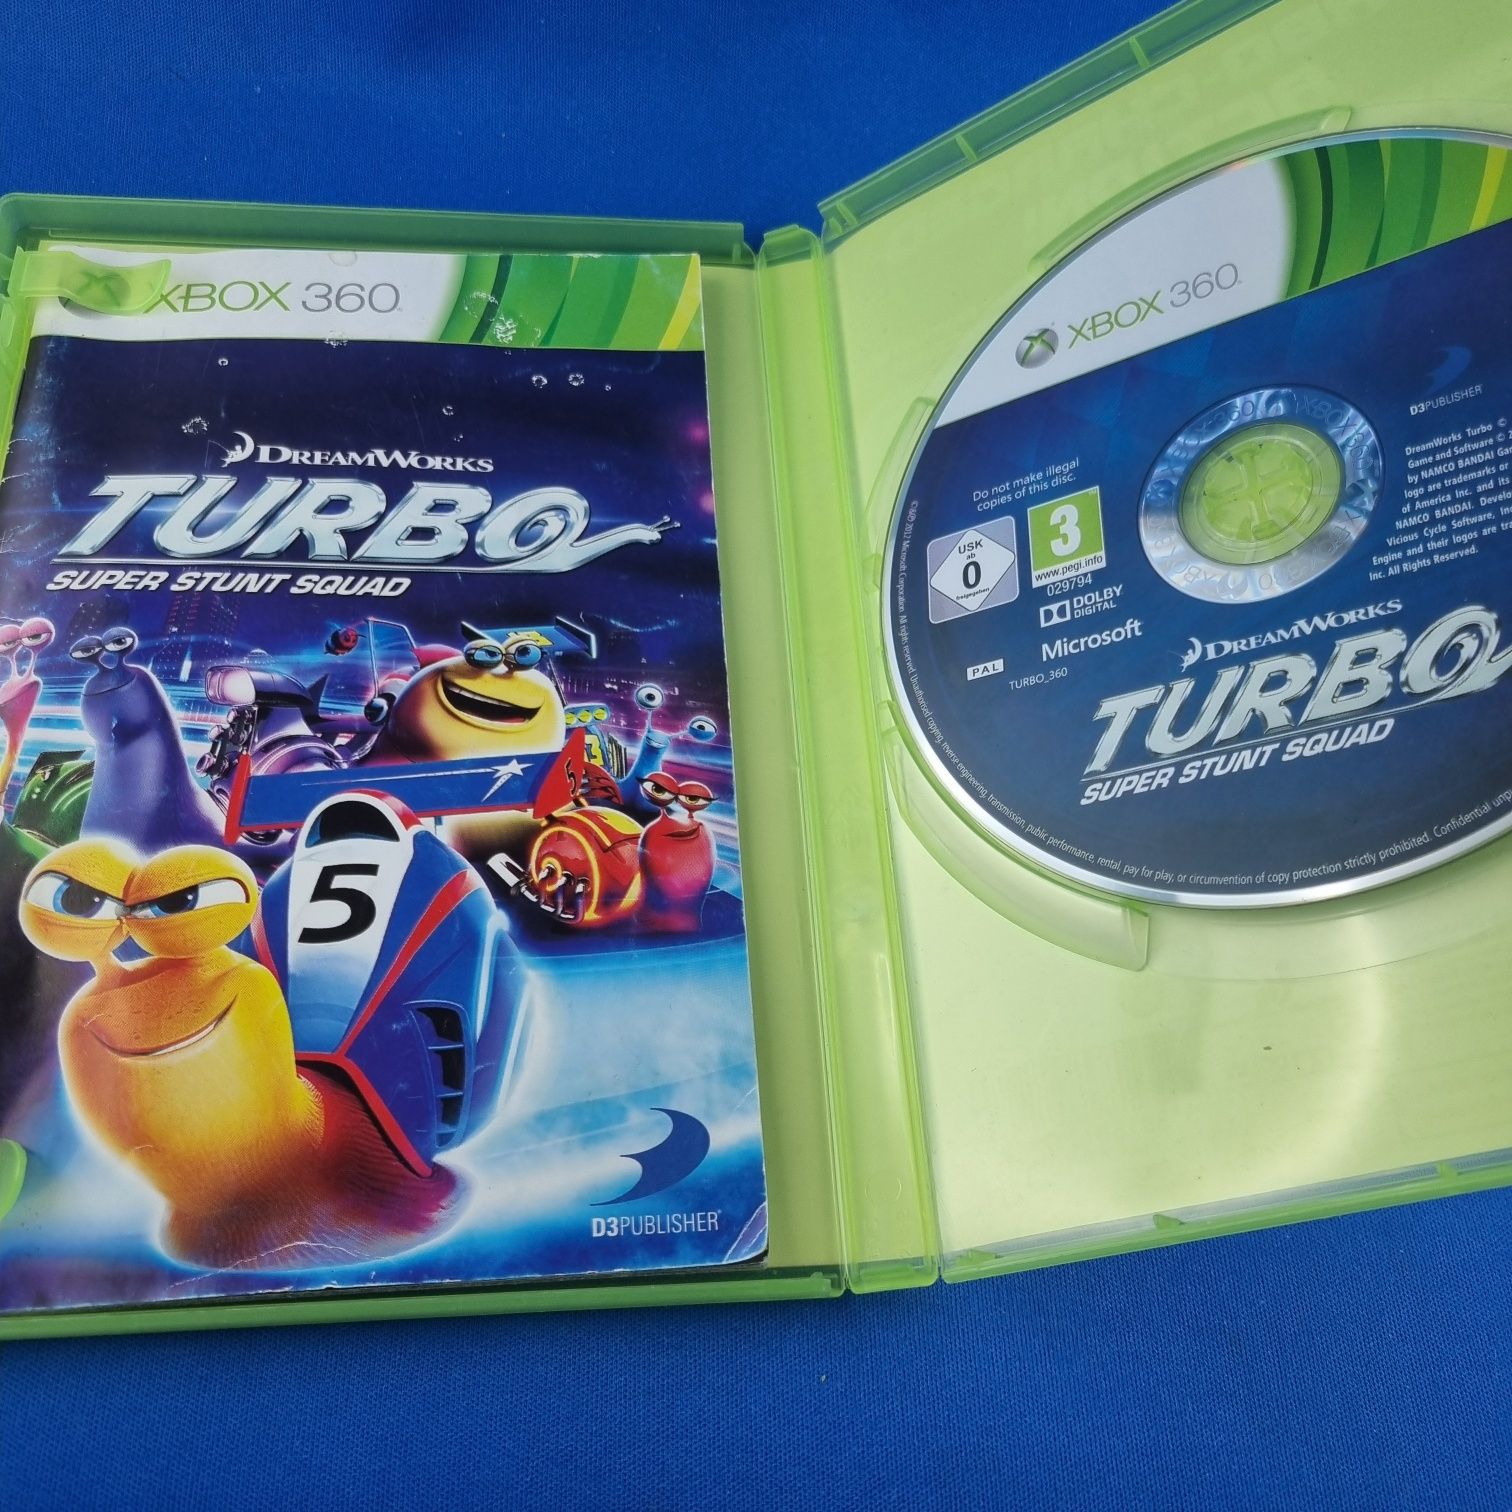 Turbo Super Stunt Xbox 360